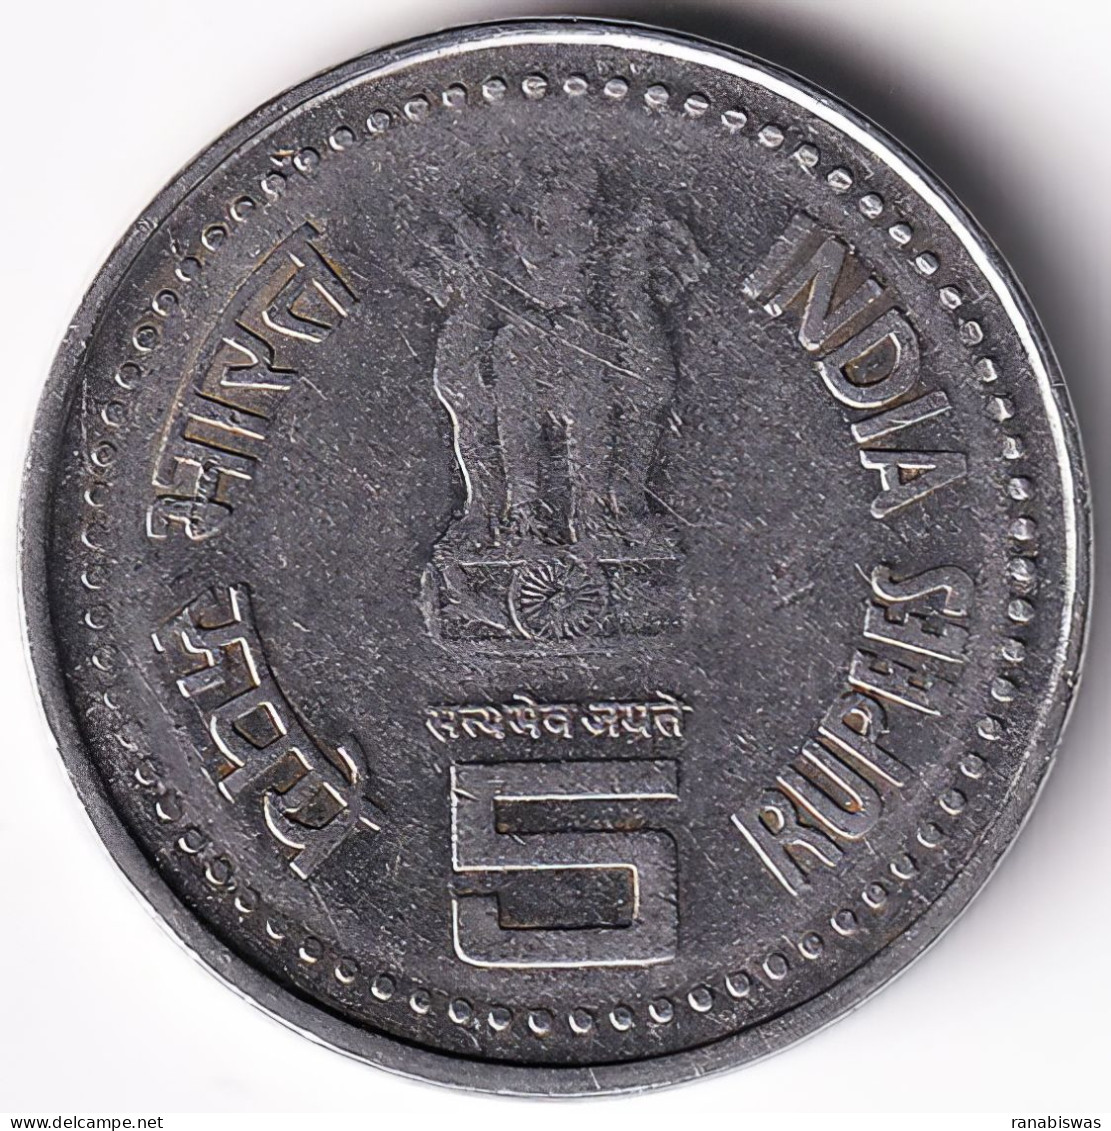 INDIA COIN LOT 141, 5 RUPEES 2006, NARAYAN GURUDEV, BOMBAY MINT, XF - Inde